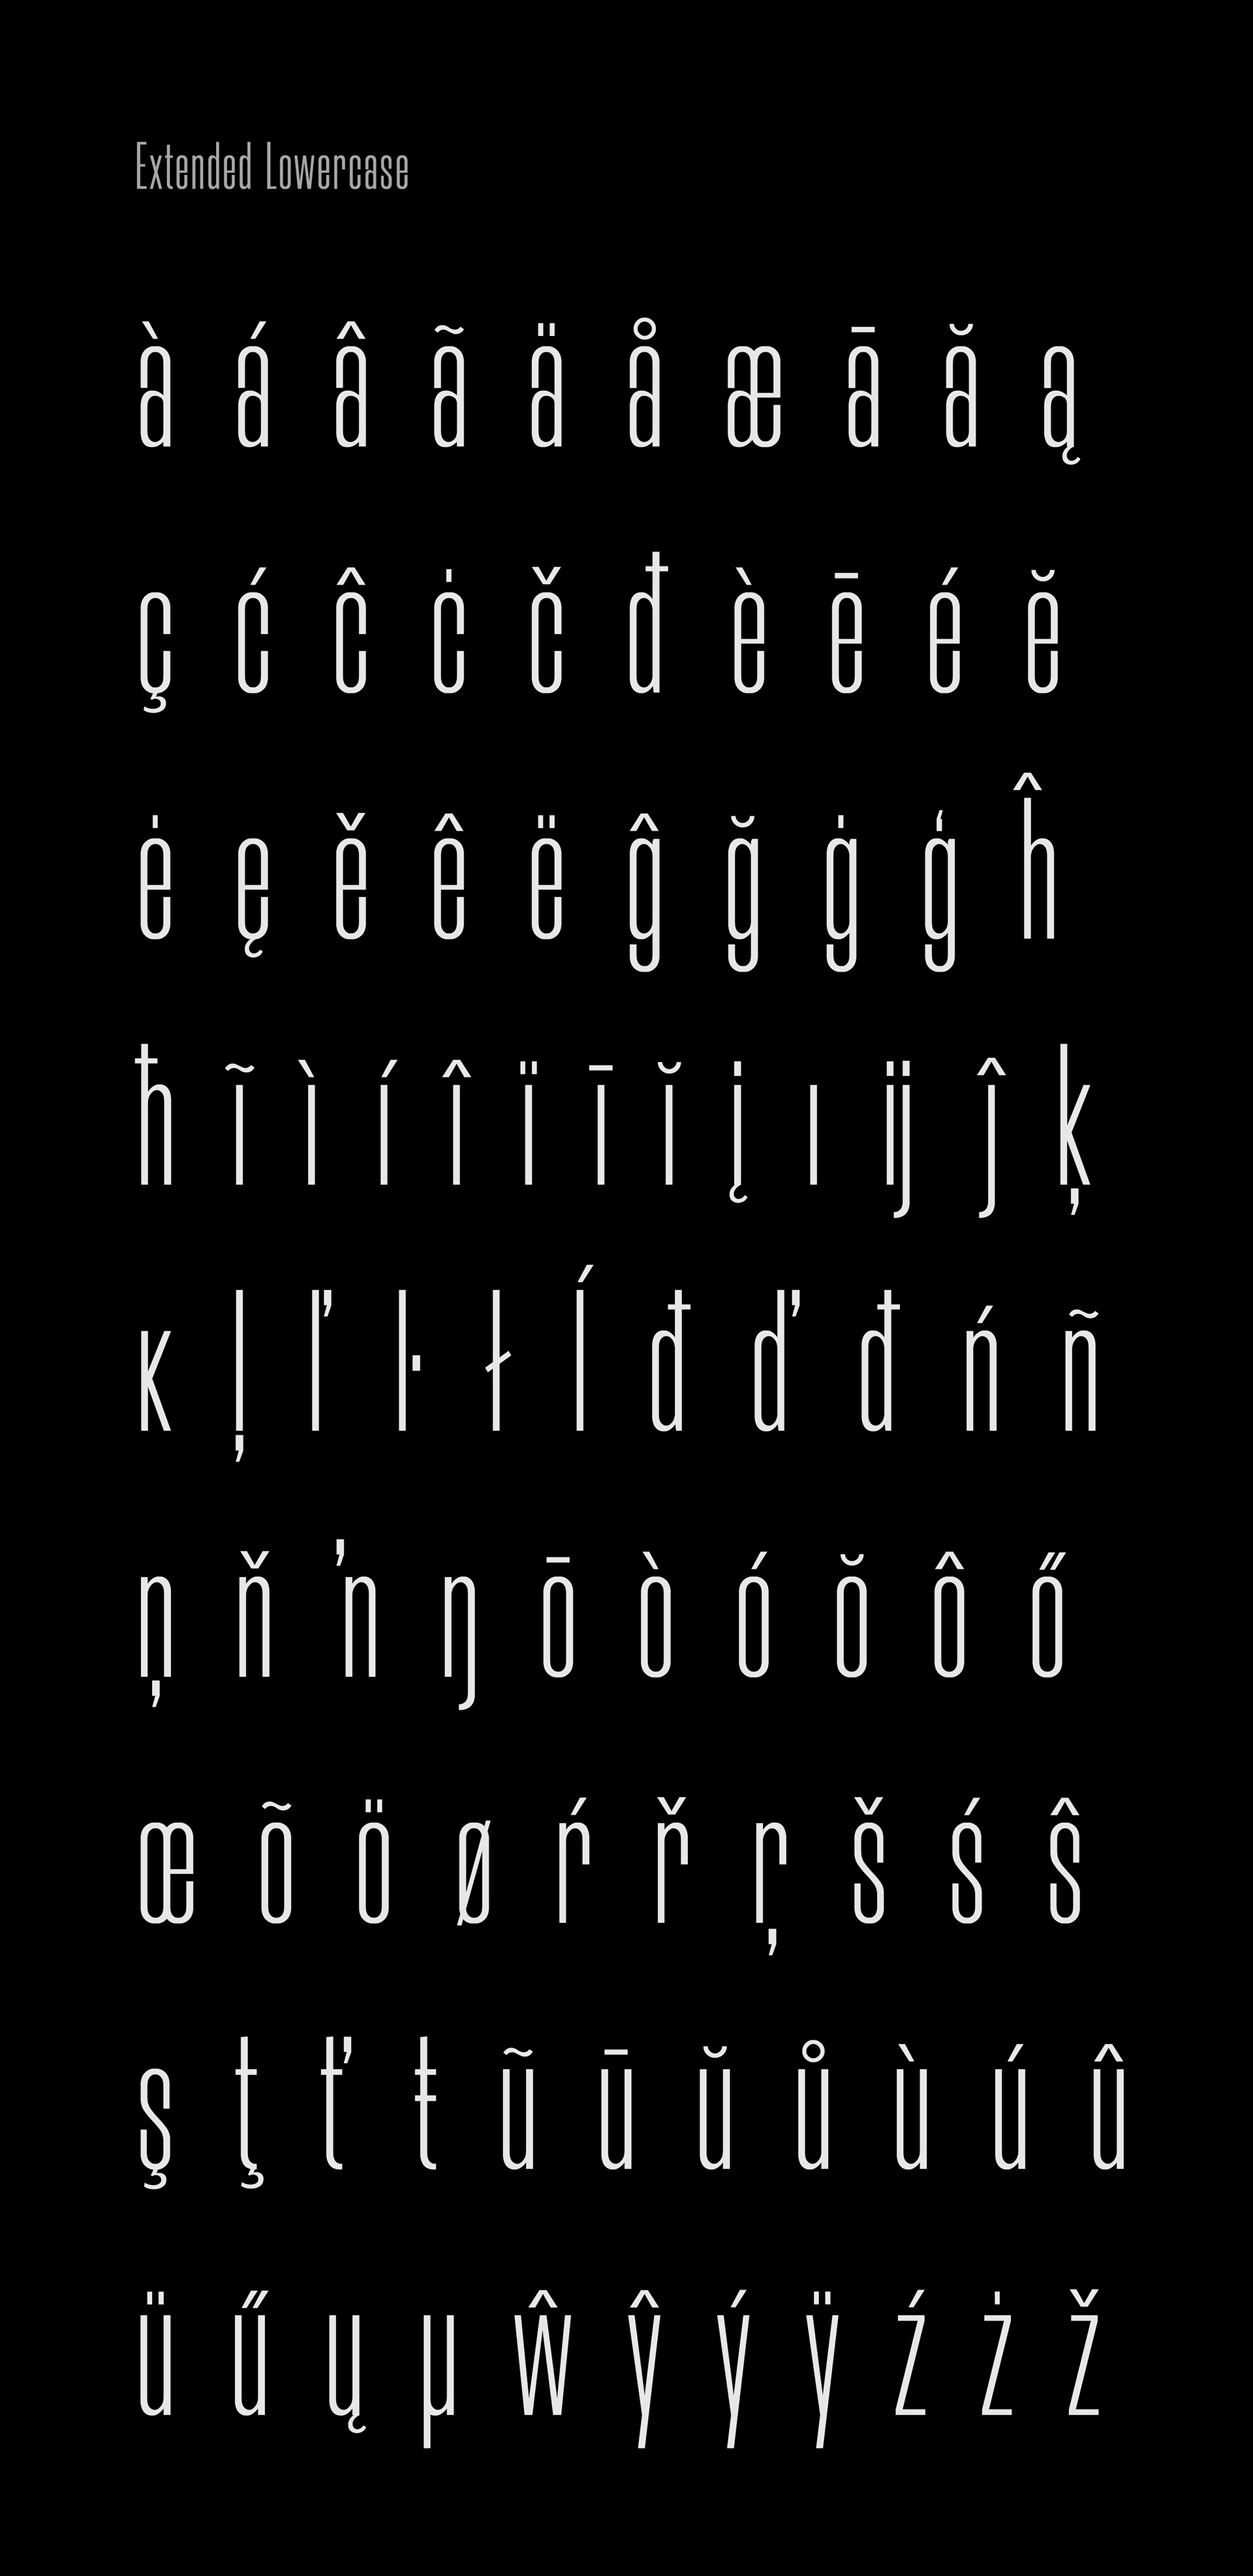 Morganite Free Font Family - sans-serif